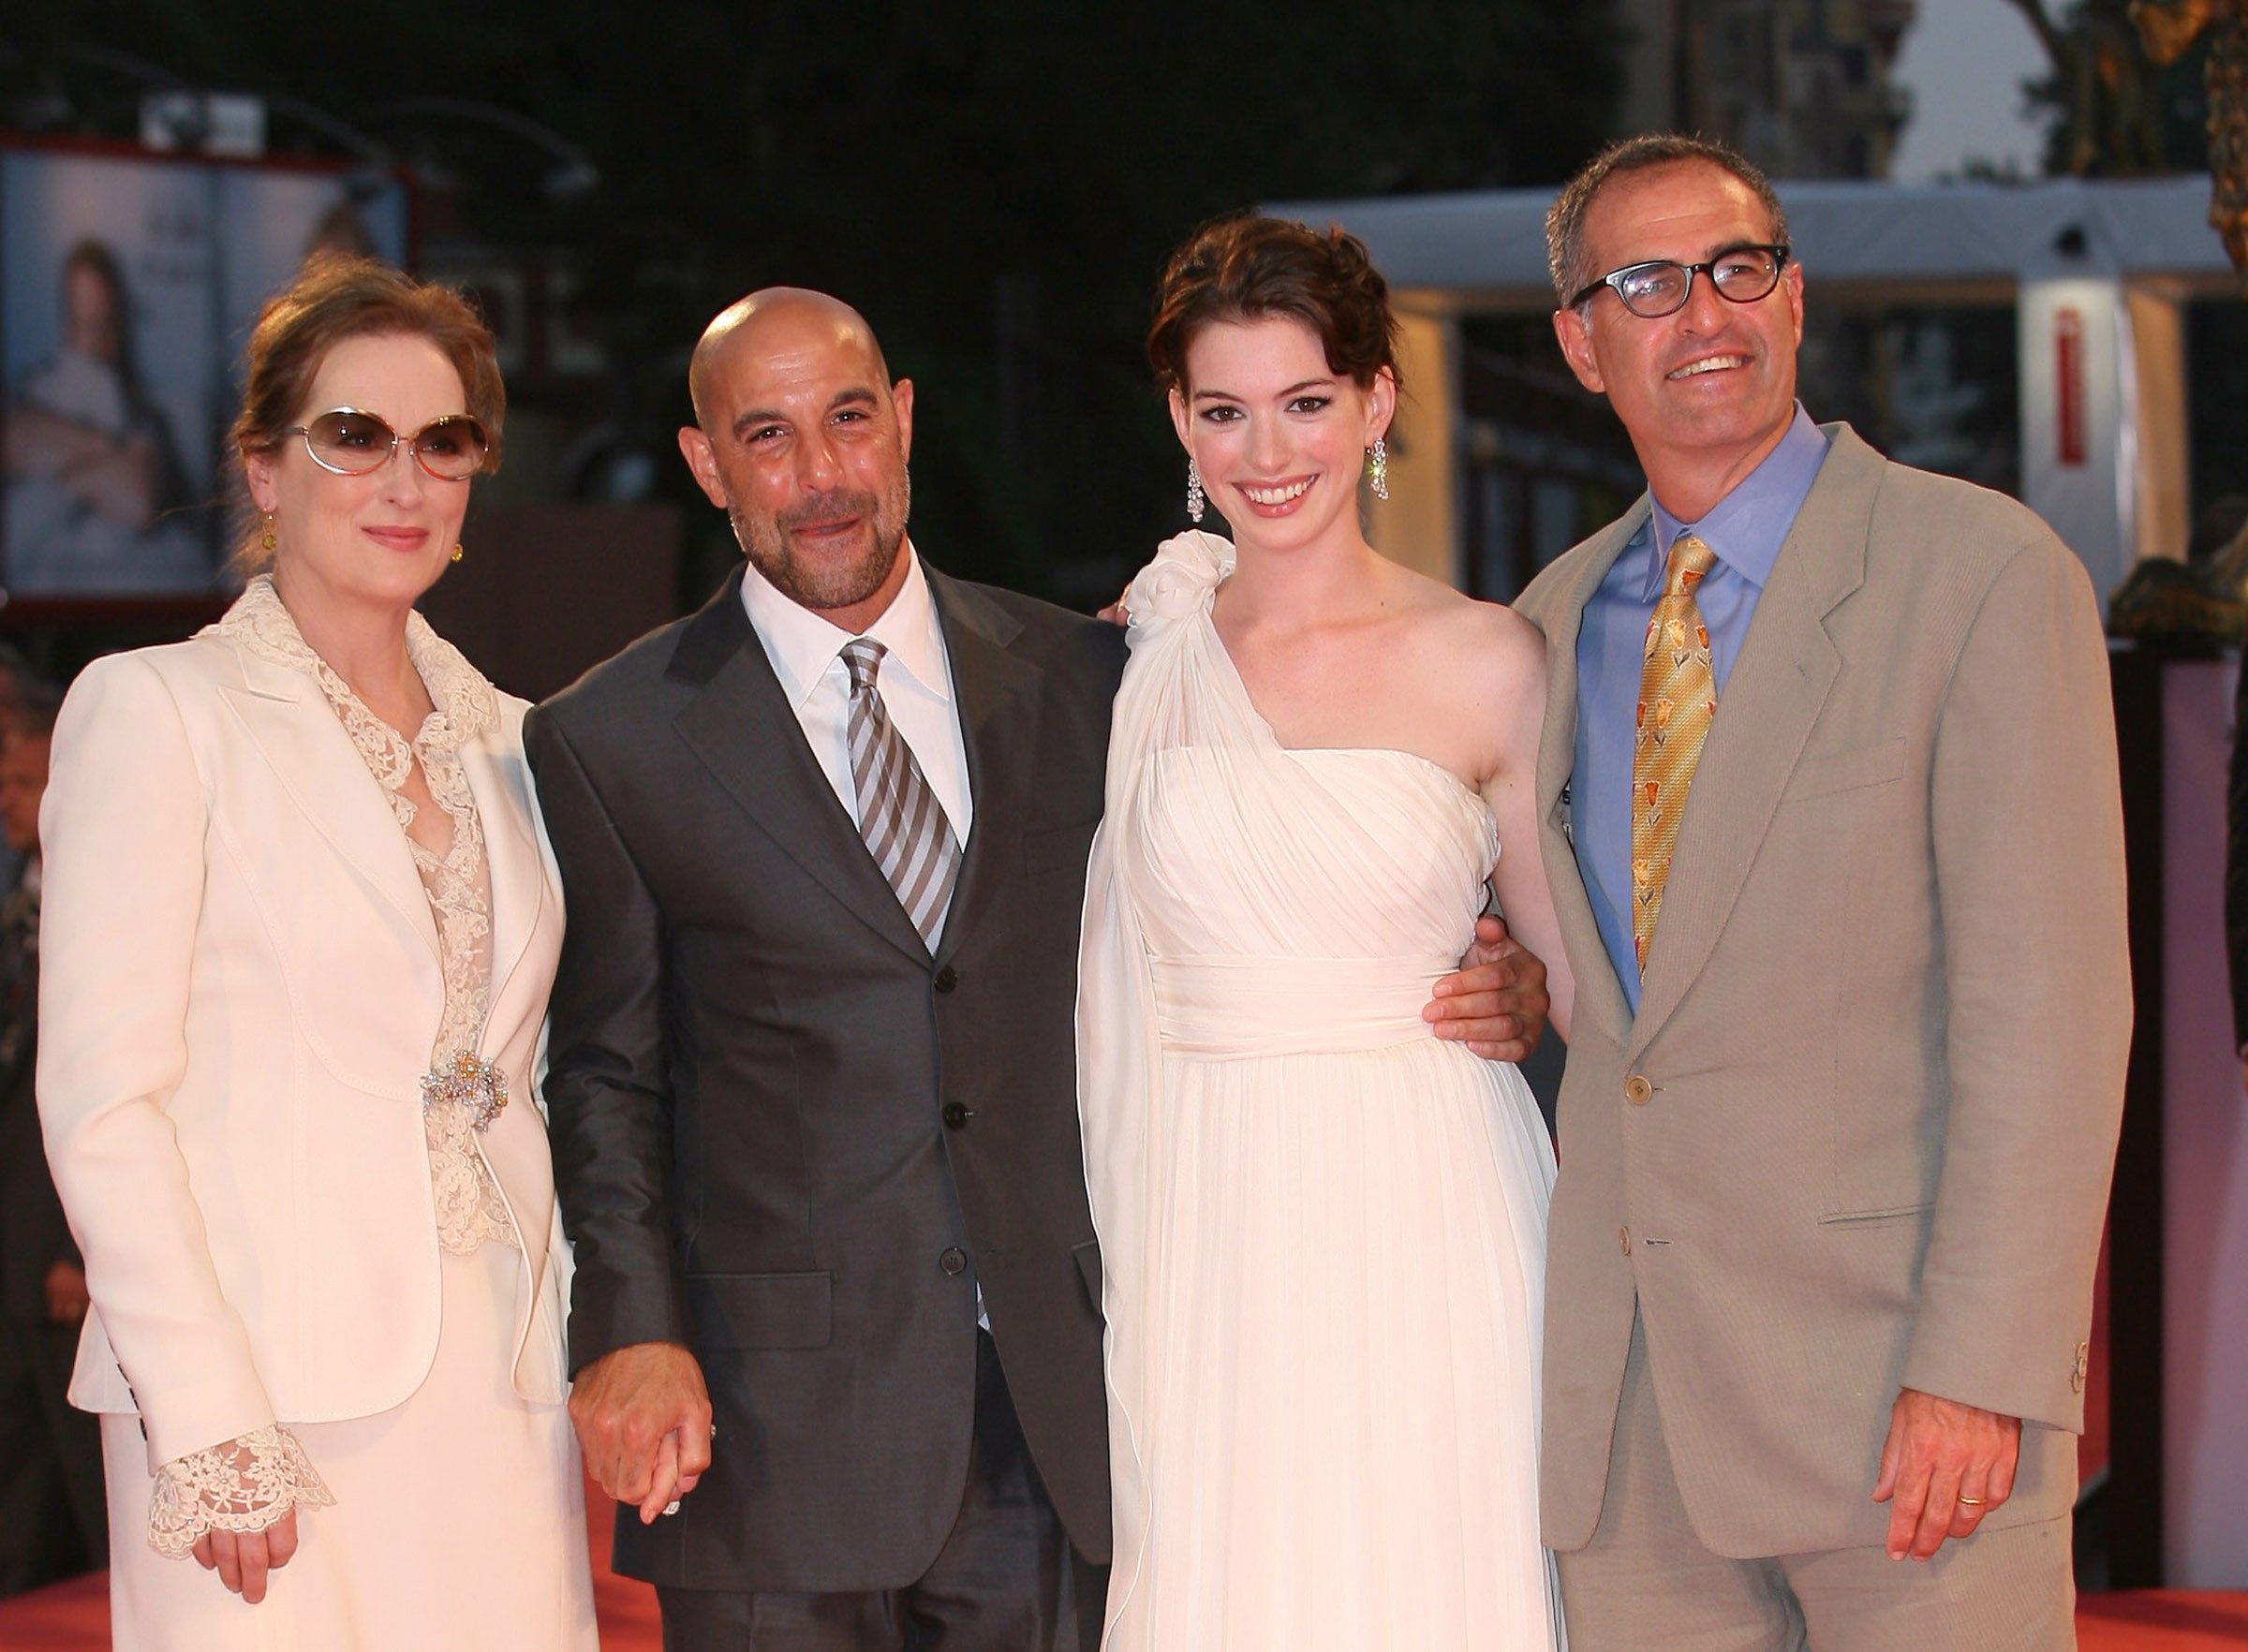 The Devil Wears Prada: Meryl Streep, Stanley Tucci, Anne Hathaway and David Frankel at an event.